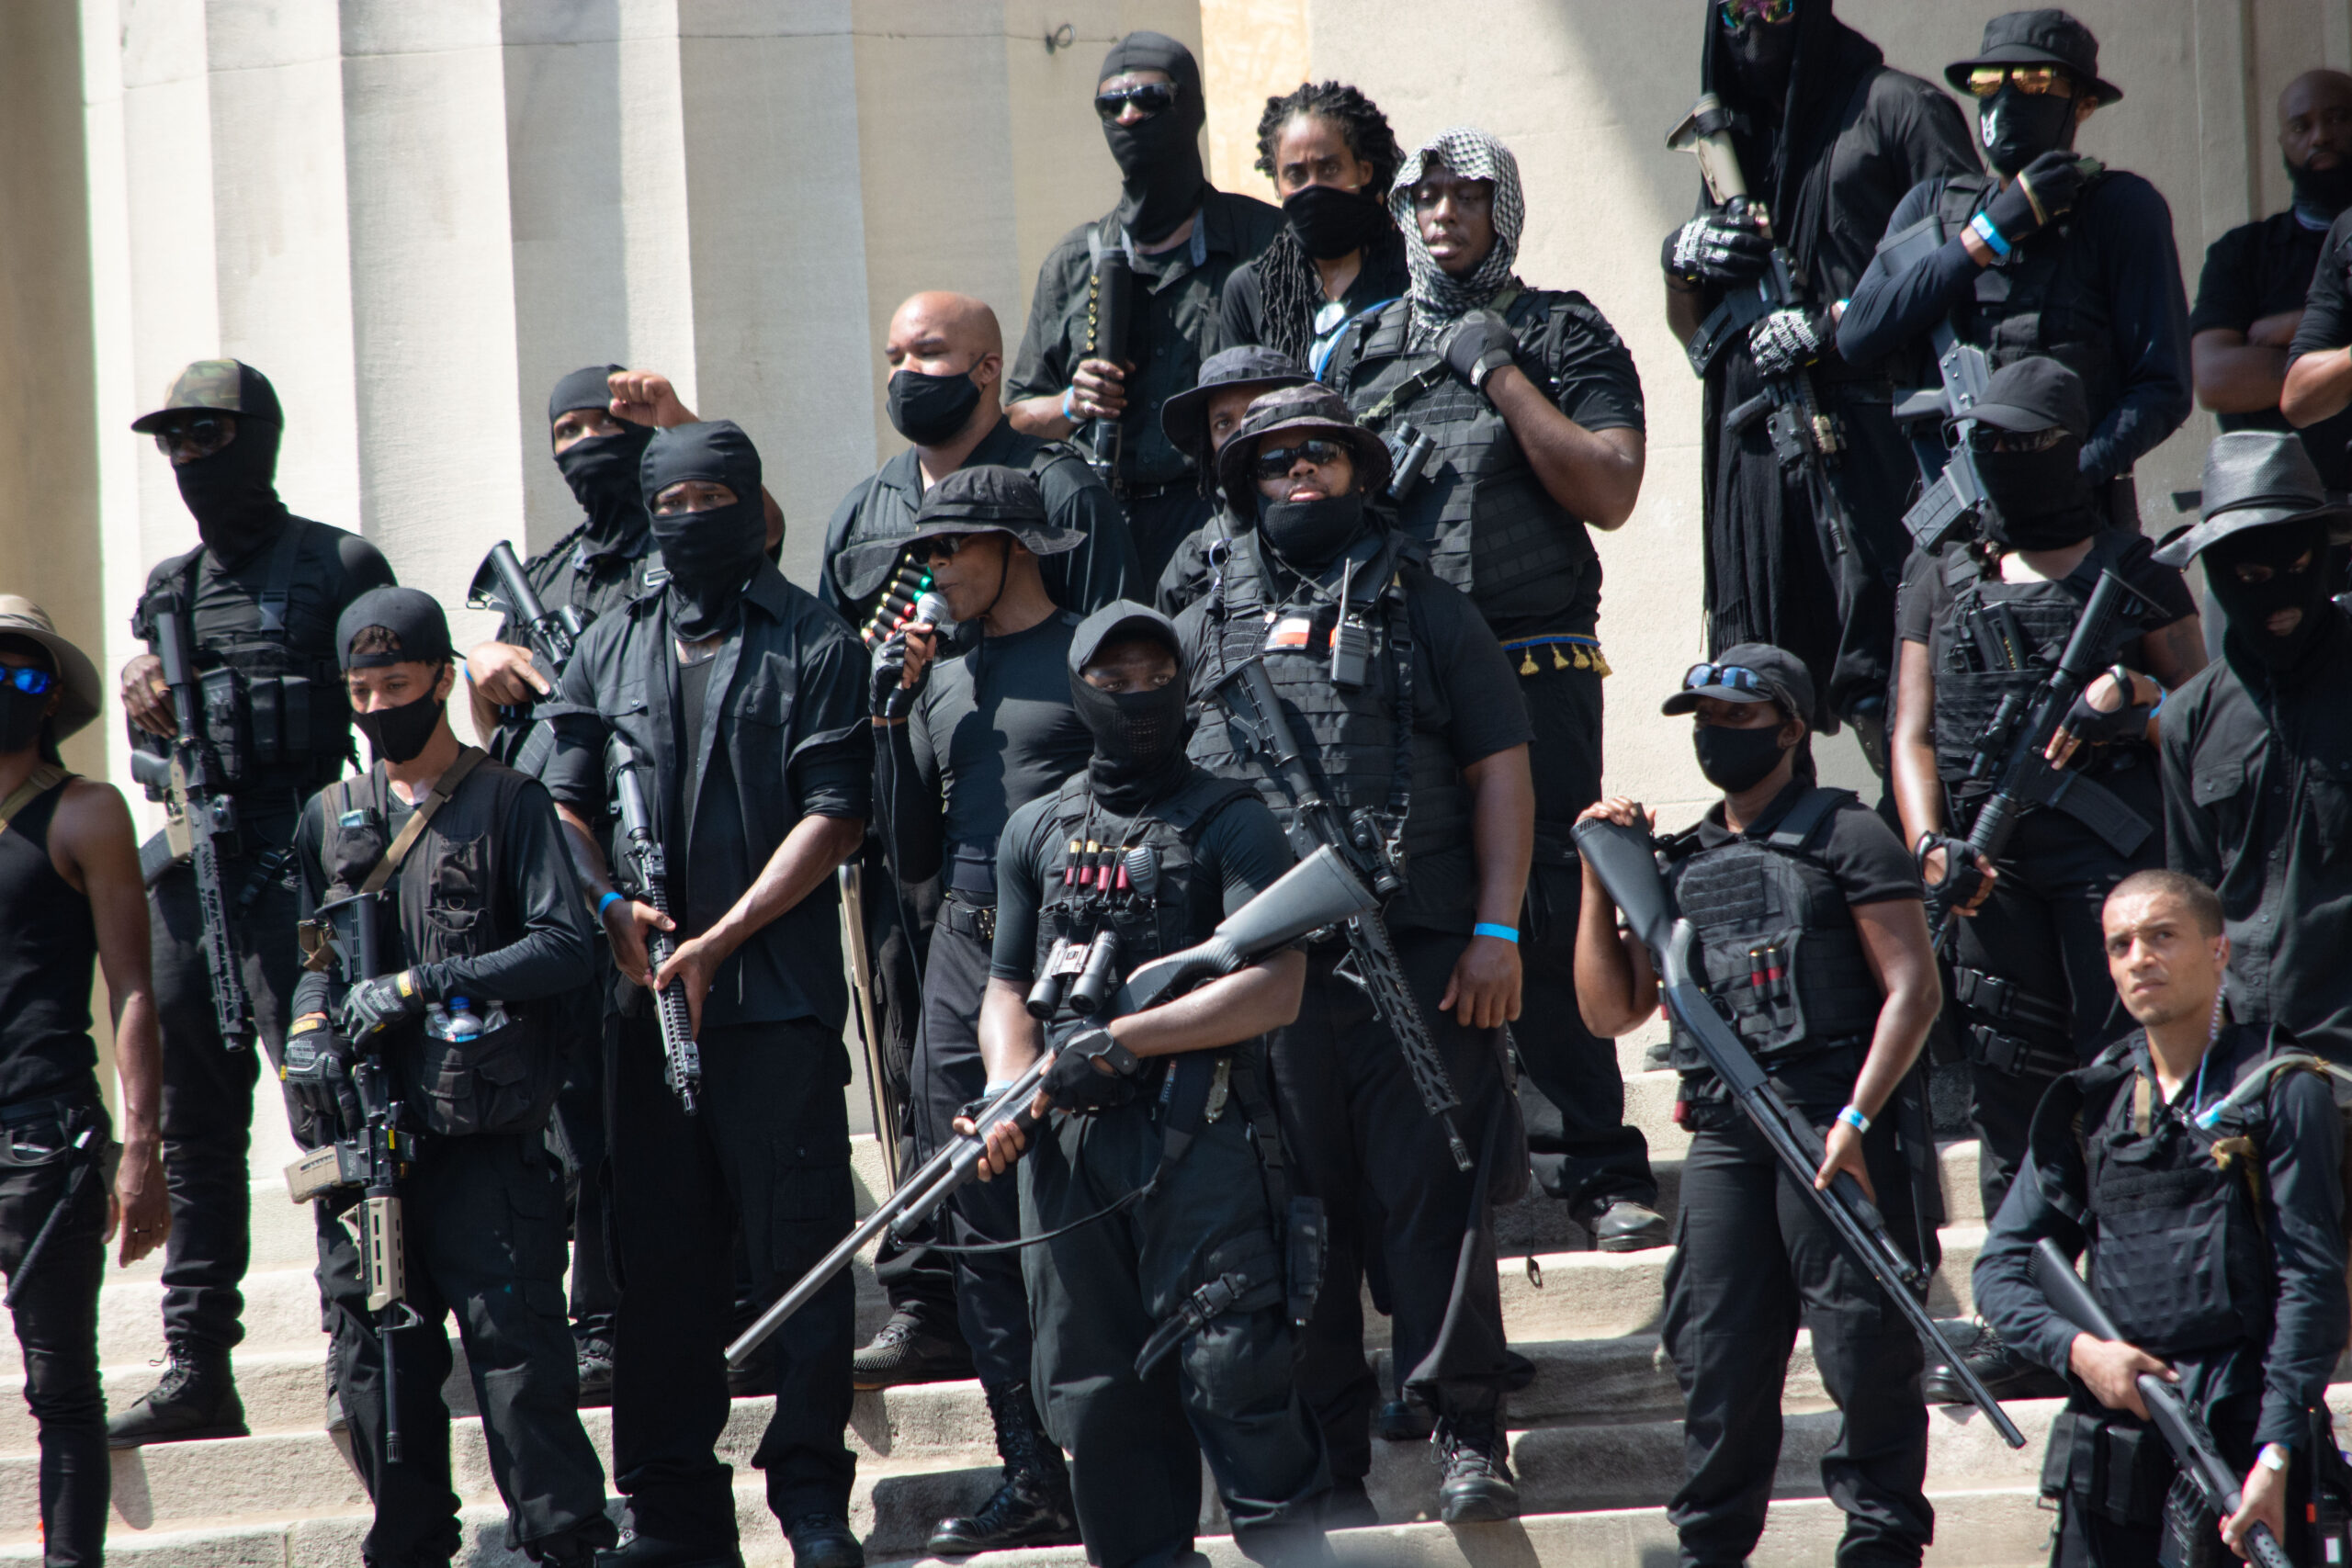 Militia groups face off in Louisville | Atlanta Daily World